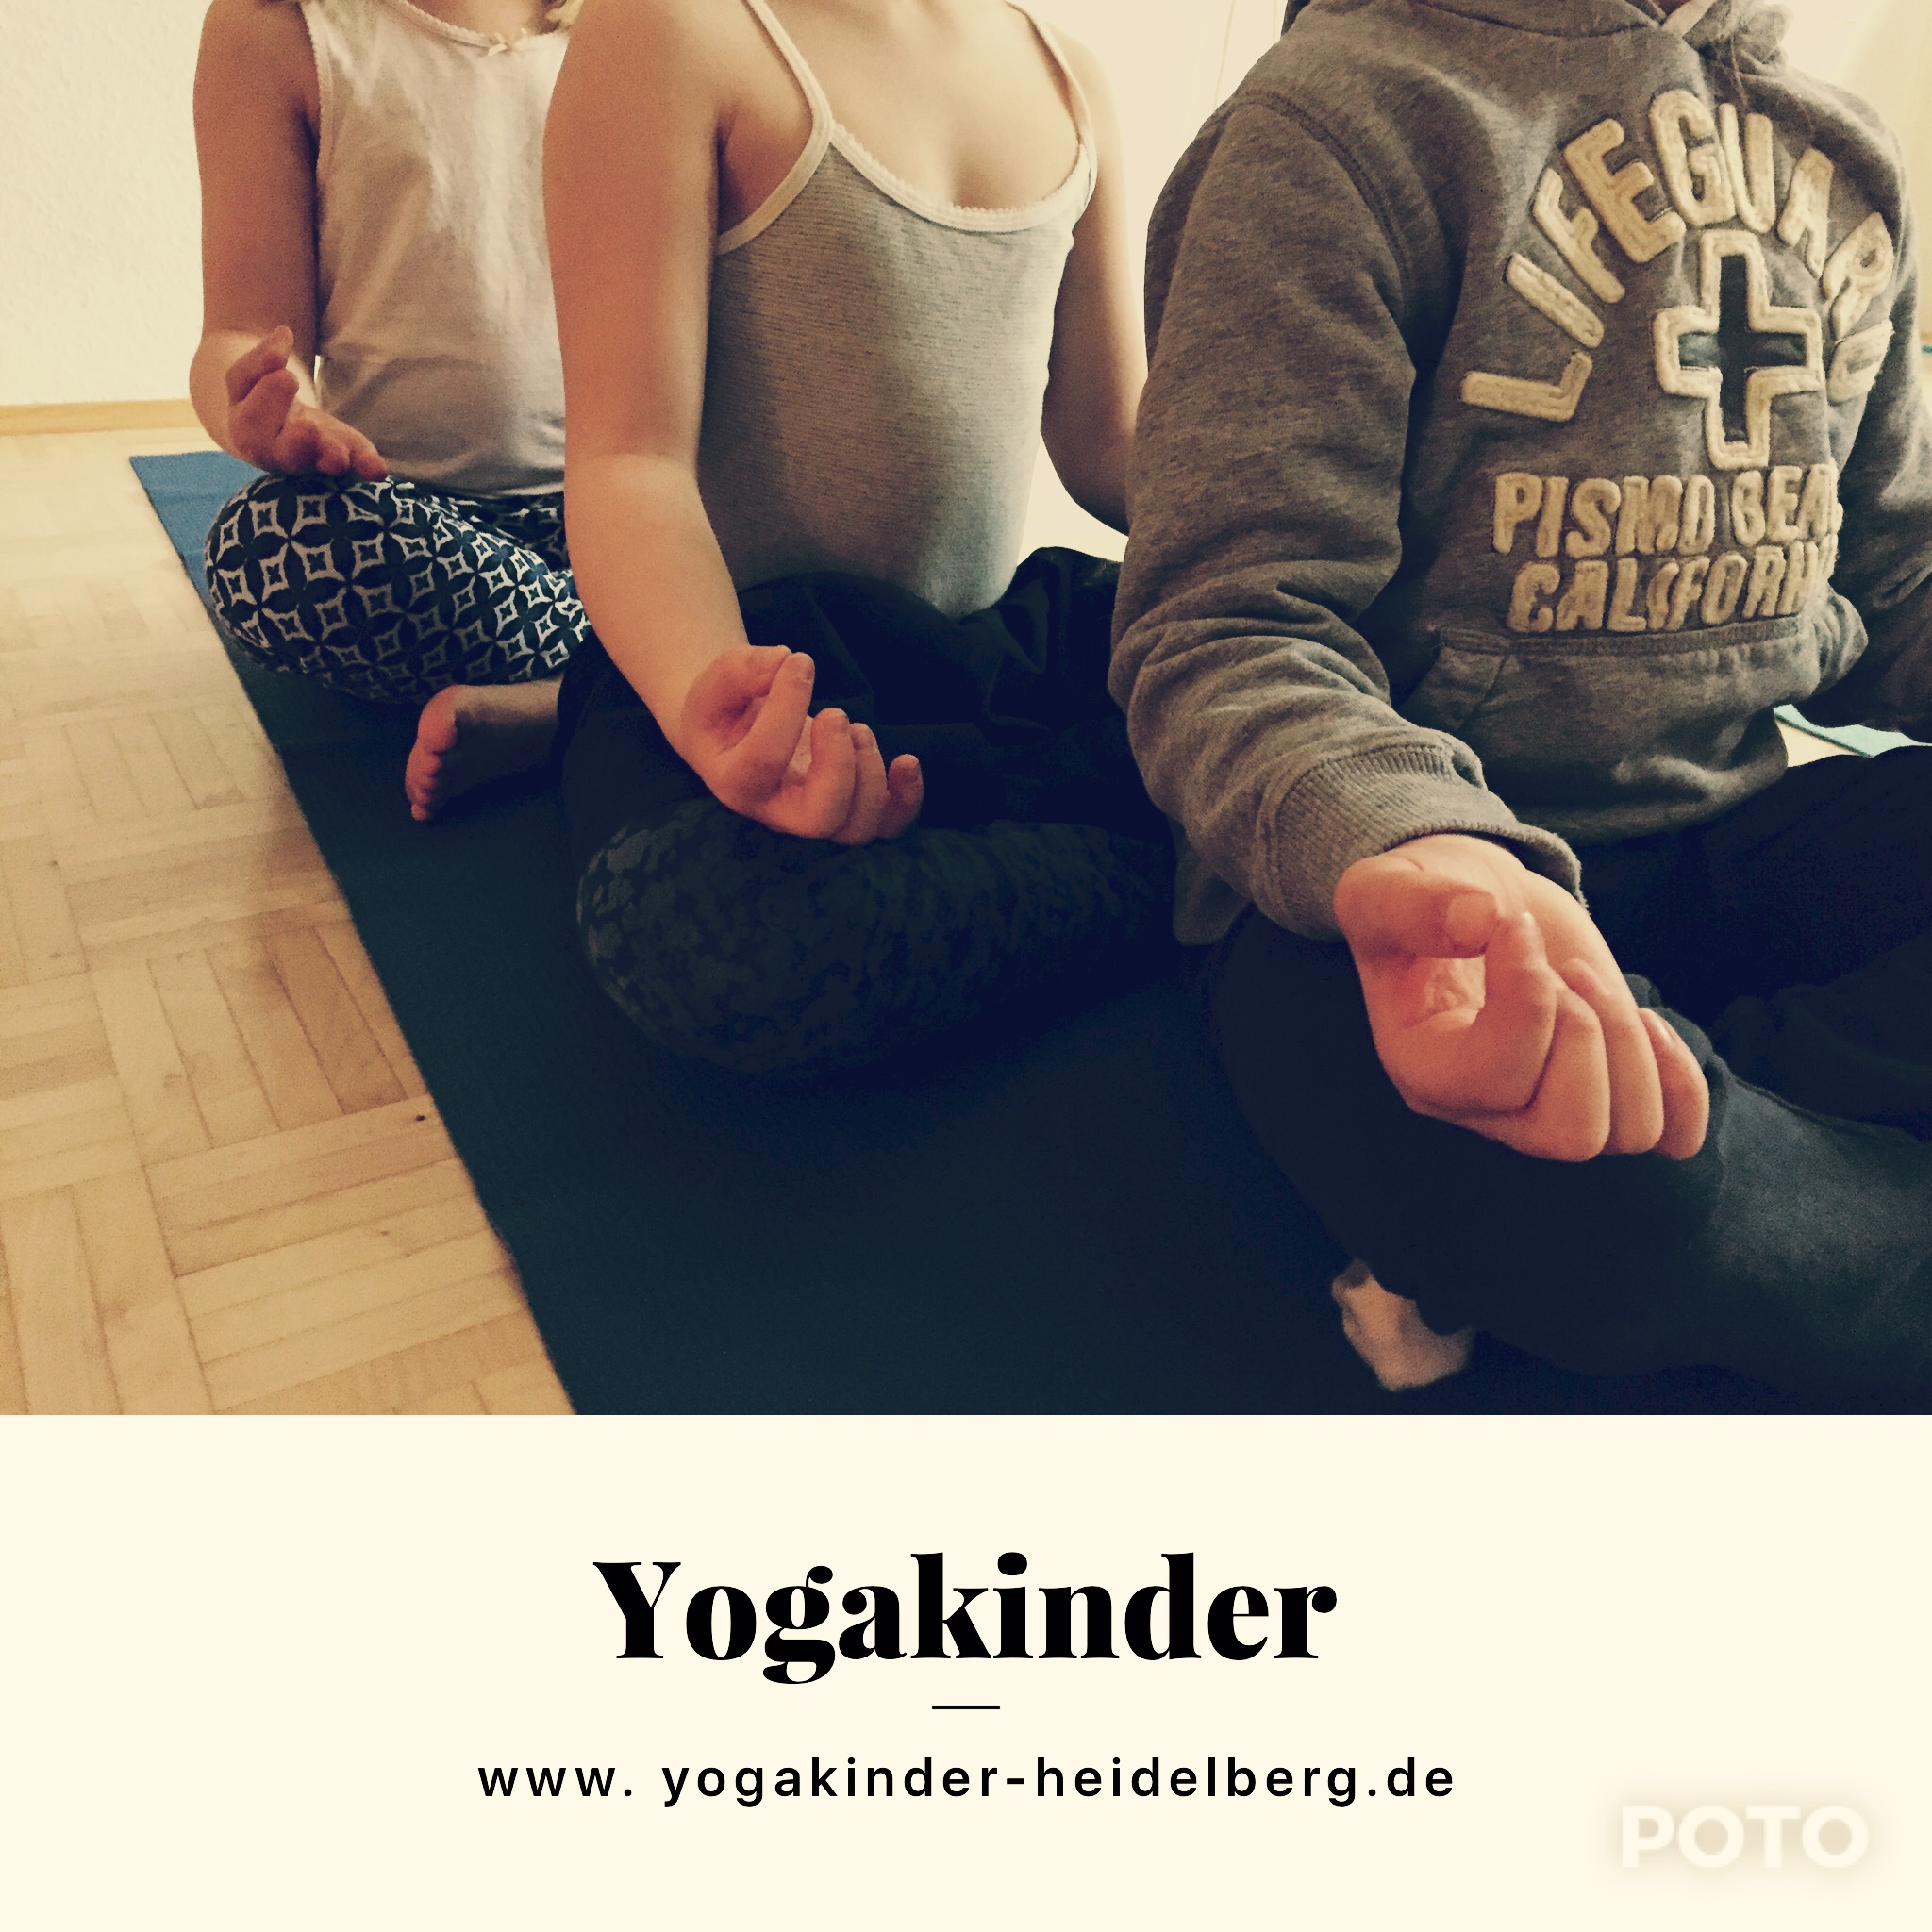 (c) Yogakinder-heidelberg.de